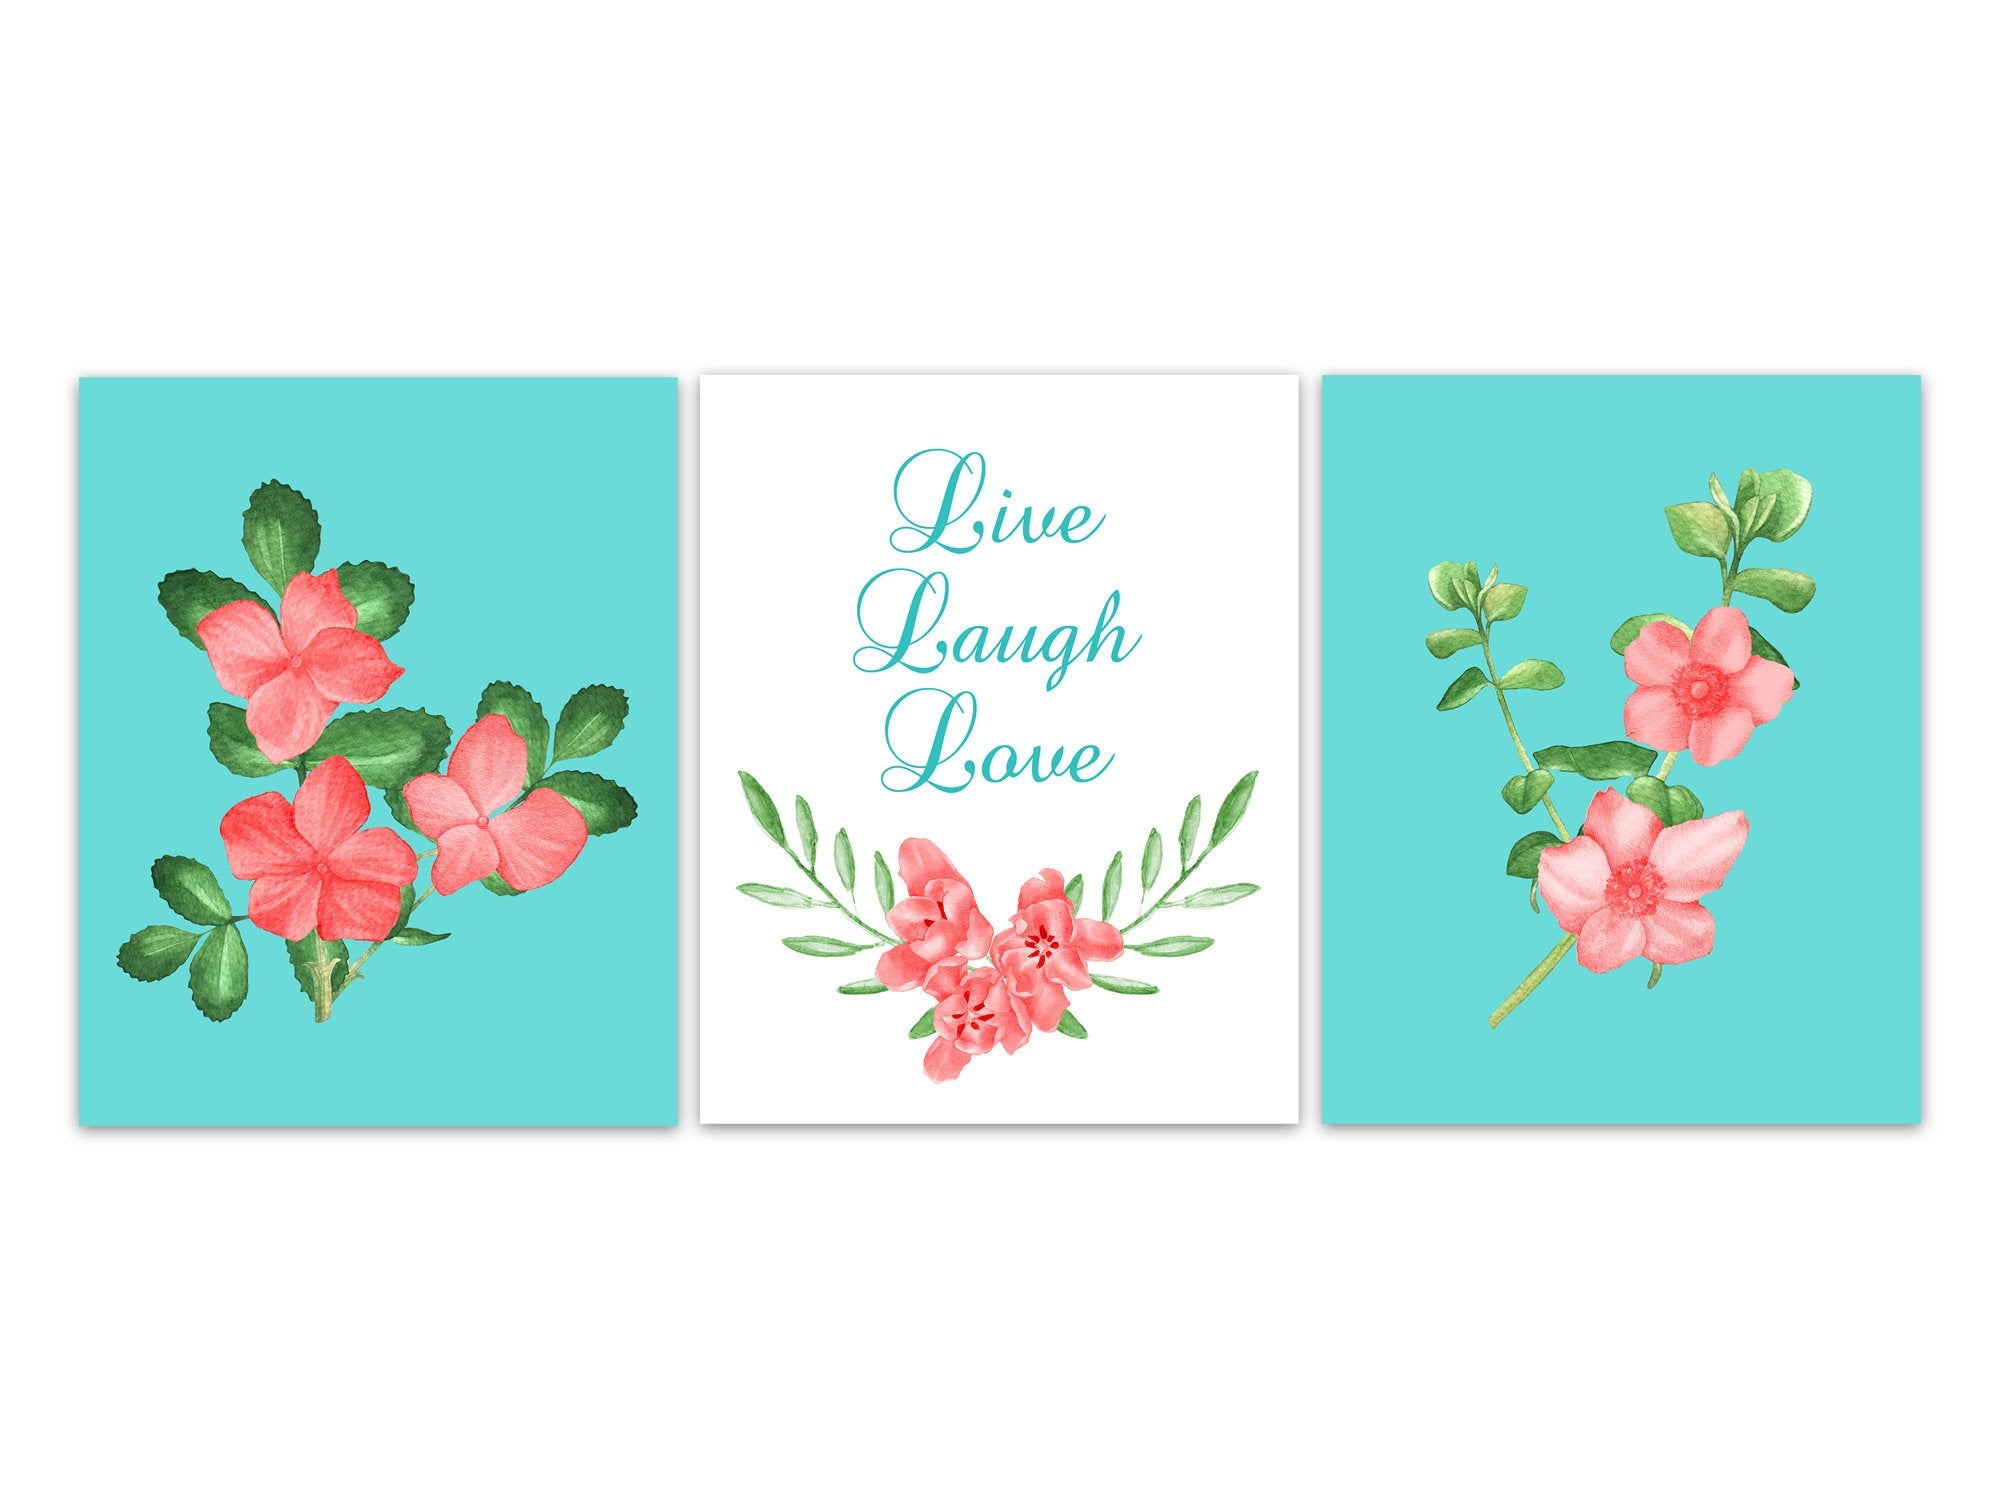 Live Laugh Love CANVAS, Watercolor Flower Bouquet Art, Coral and Turquoise Floral Artwork, Set of 3 Home Decor Canvas or Prints - HOME375